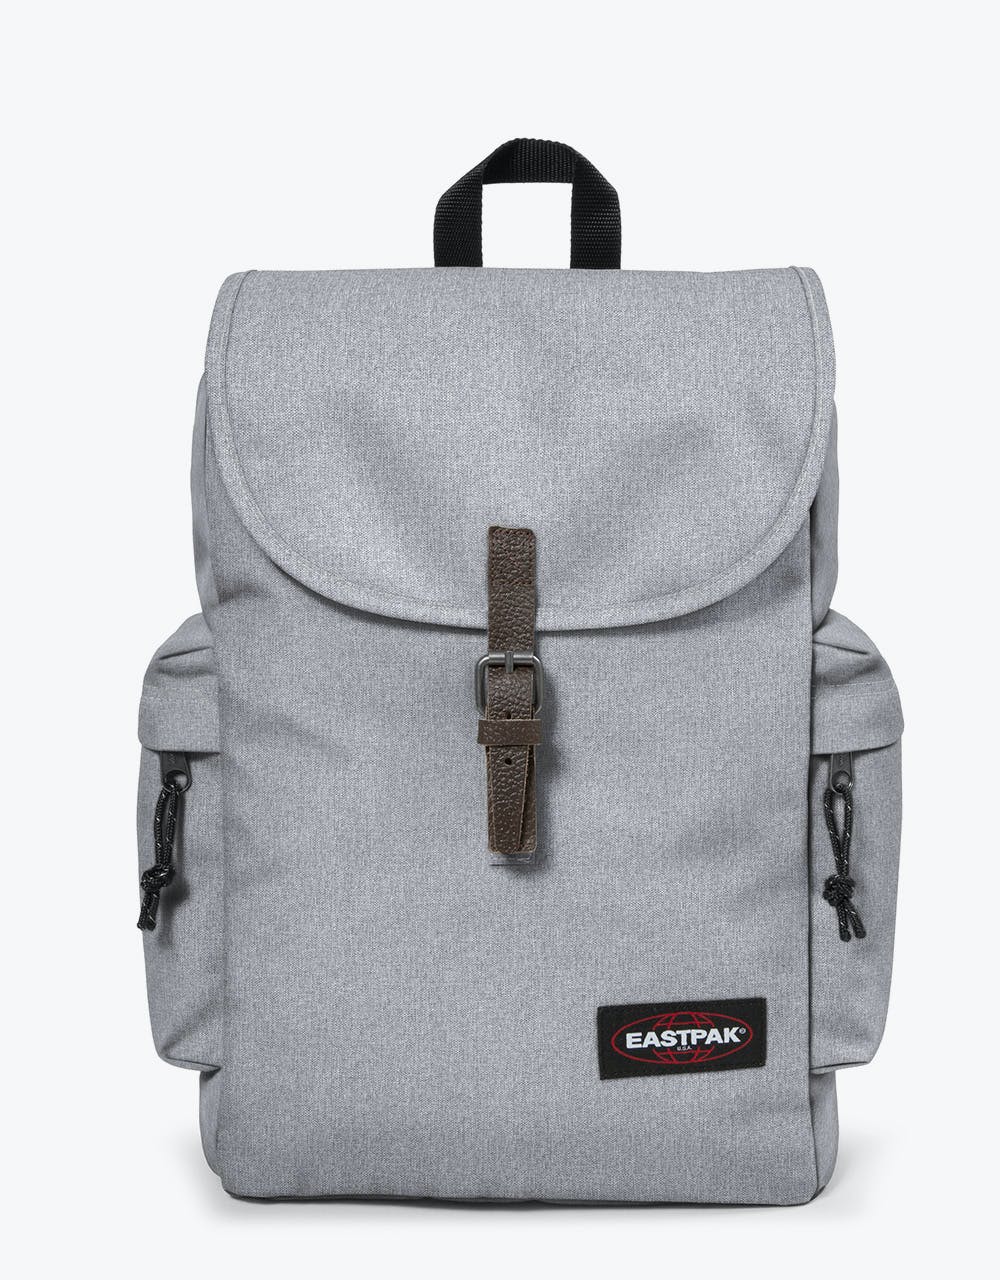 Eastpak Austin Backpack - Sunday Grey